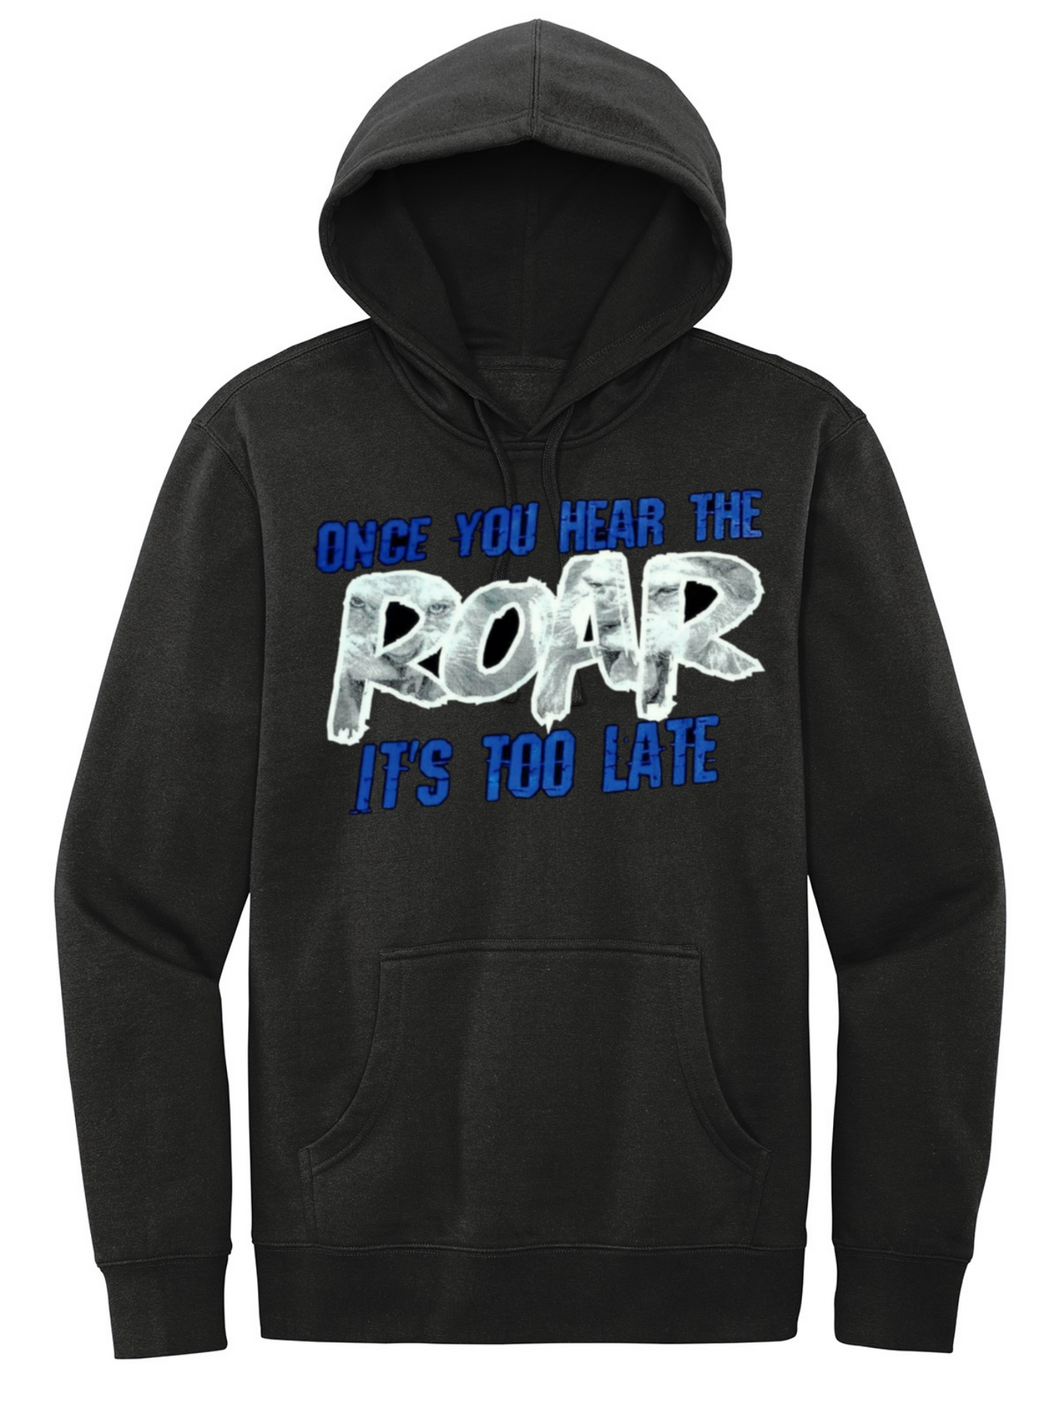 ONCE YOU HEAR THE ROAR hoodie!